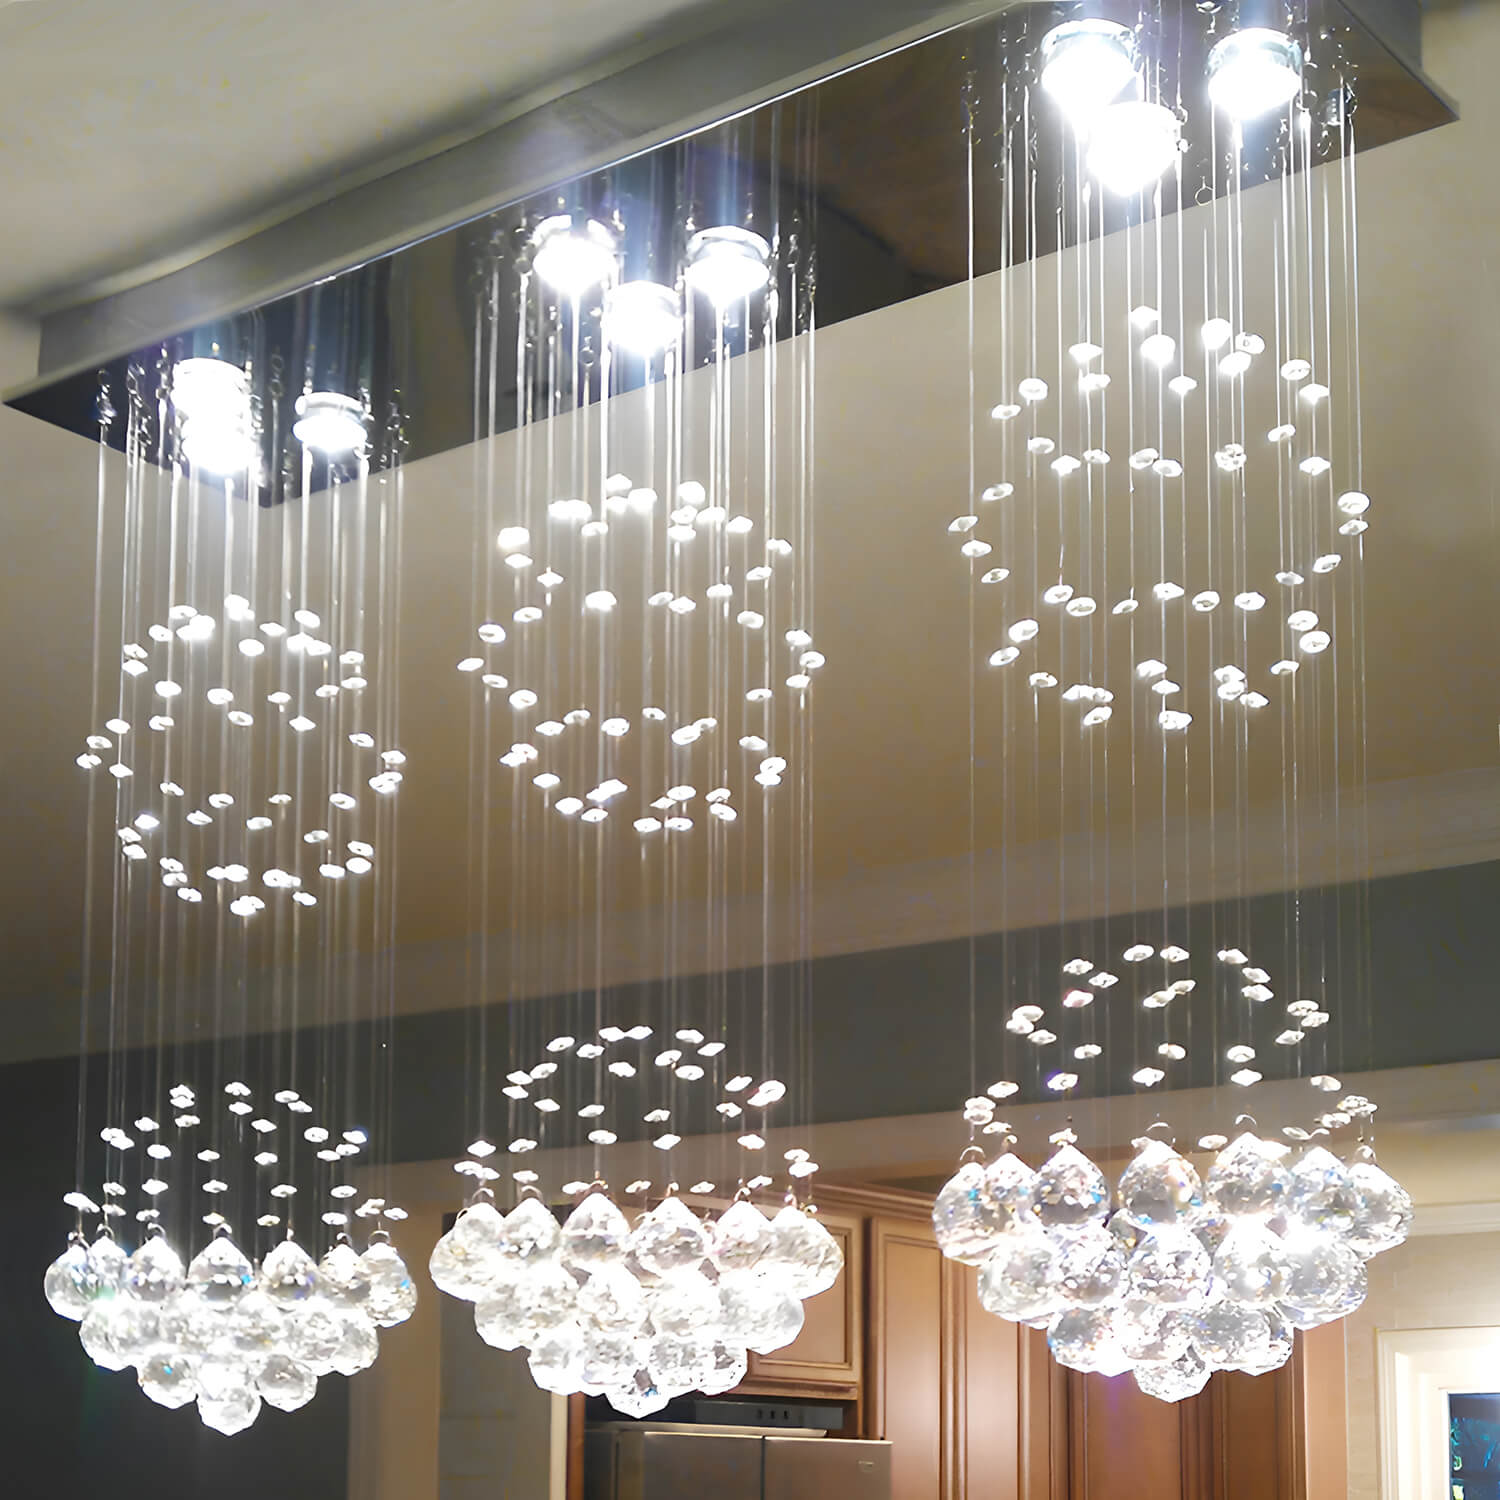  Contemporary Island Crystal Raindrop Chandelier - Dining Room Ceiling Light-2 |Sofary